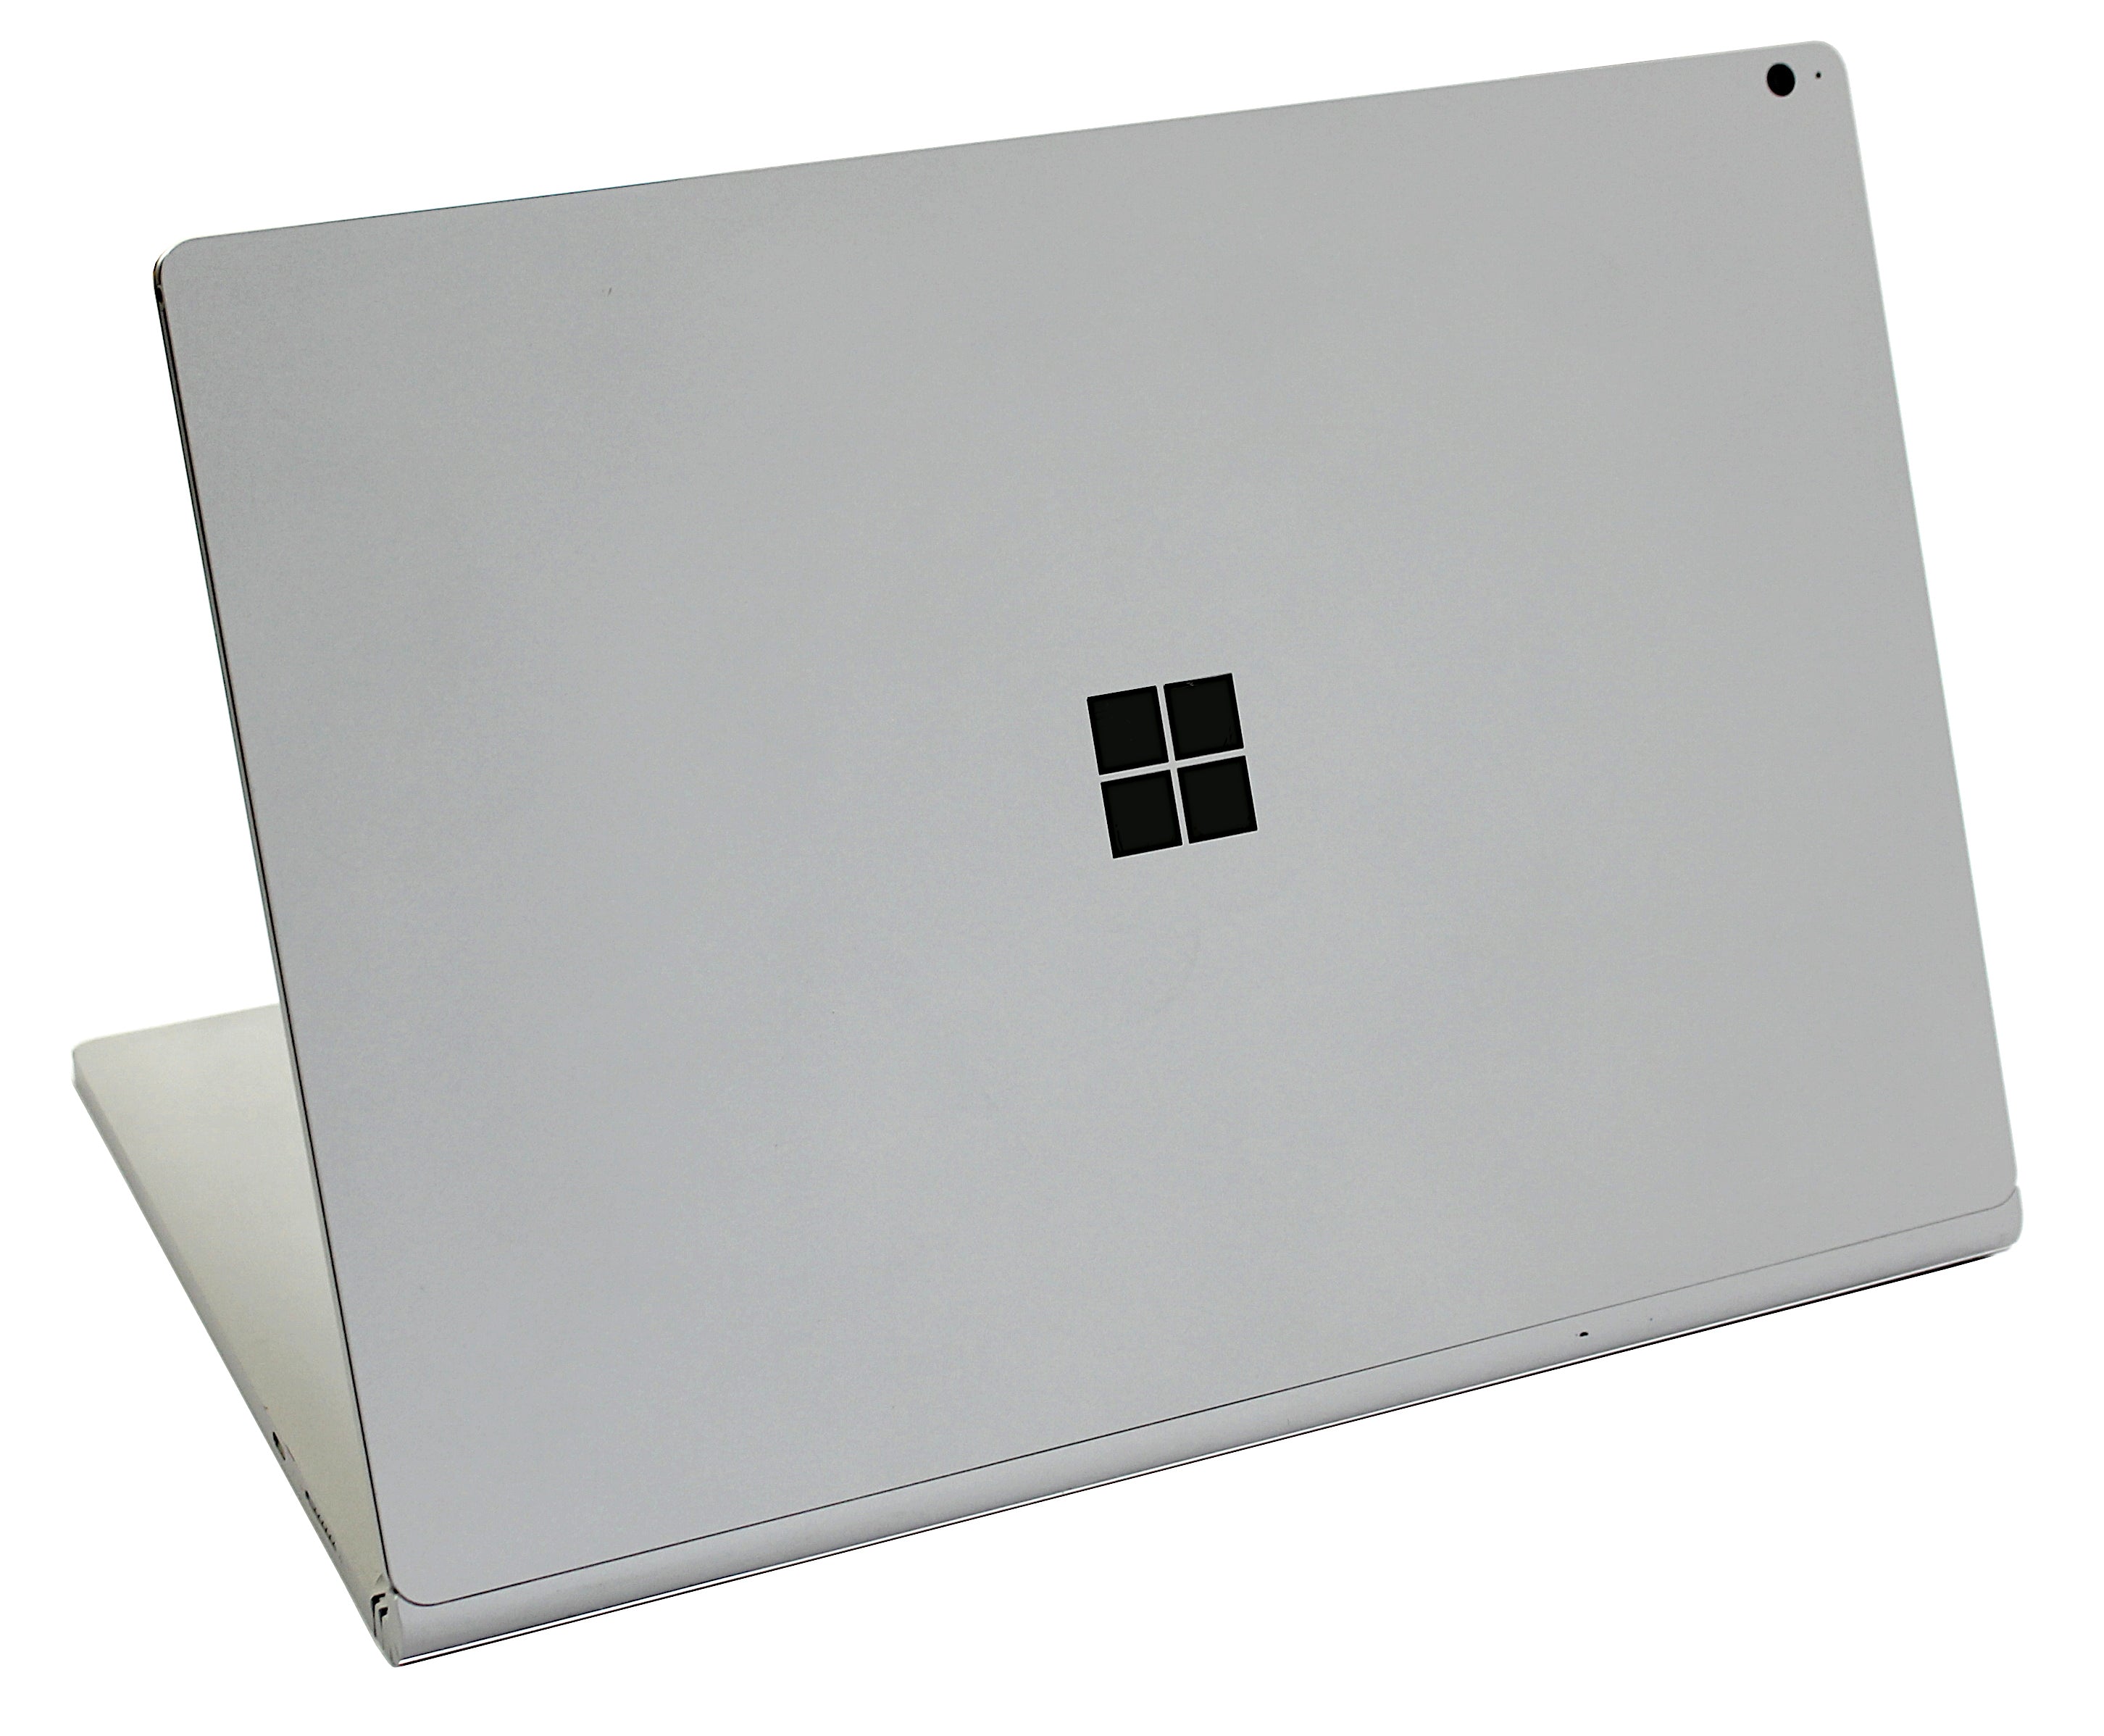 Microsoft Surface Book 2, 15" Intel Core i7, 16GB RAM, 256GB SSD